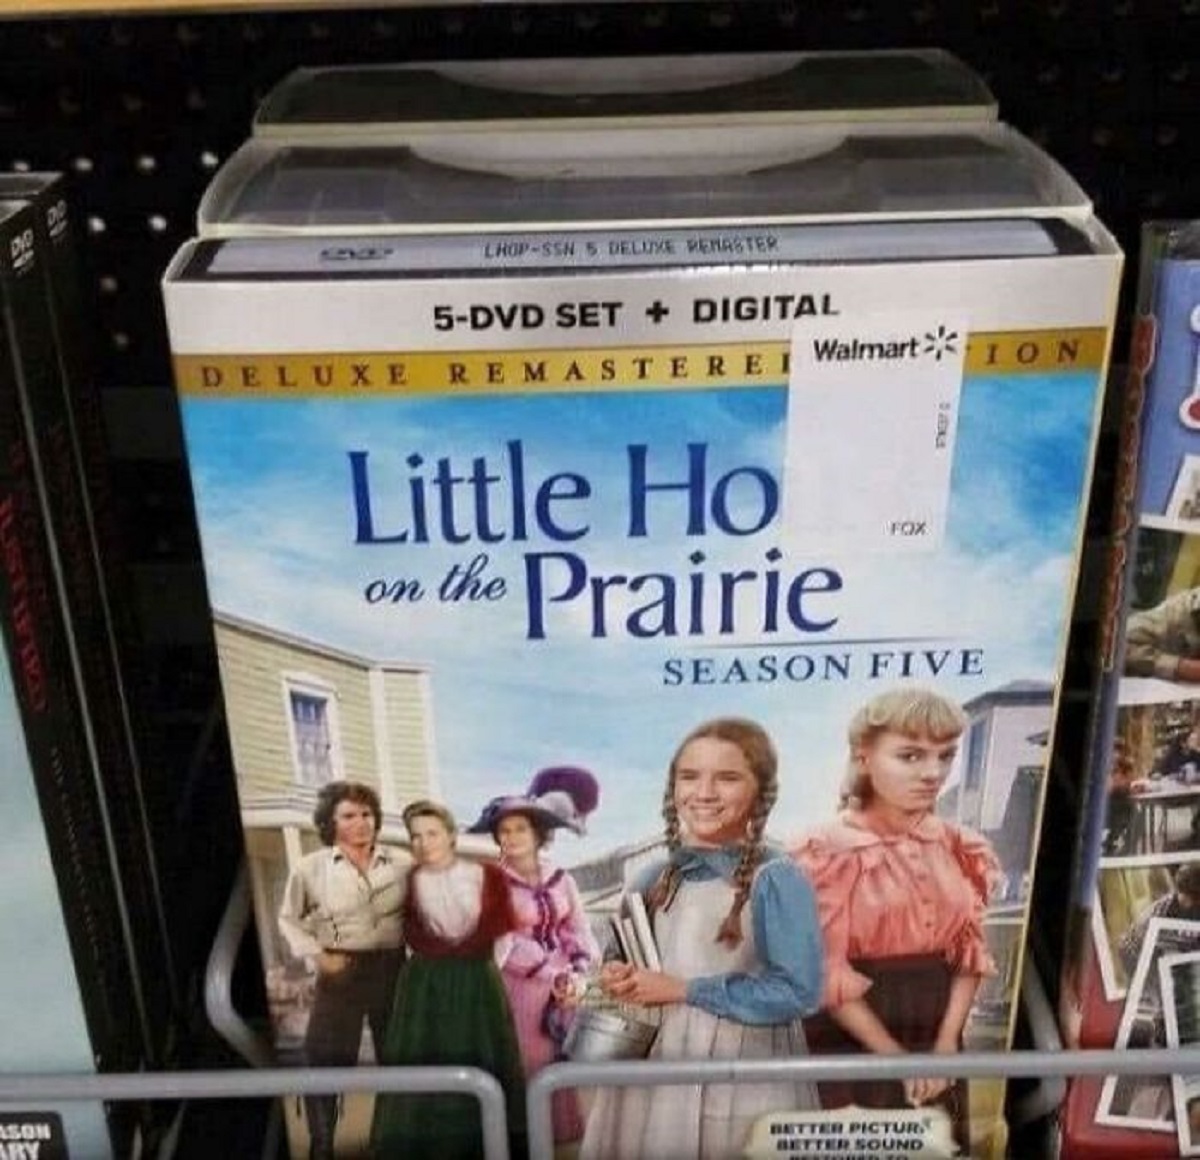 little ho on the prairie - Did Do LhopSsn 5 Deluxe Remaster 5Dvd Set Digital Deluxe Remasterei Walmart Ion Little Ho on the Prairie Fox Season Five Ason Ry Better Pictur Better Sound